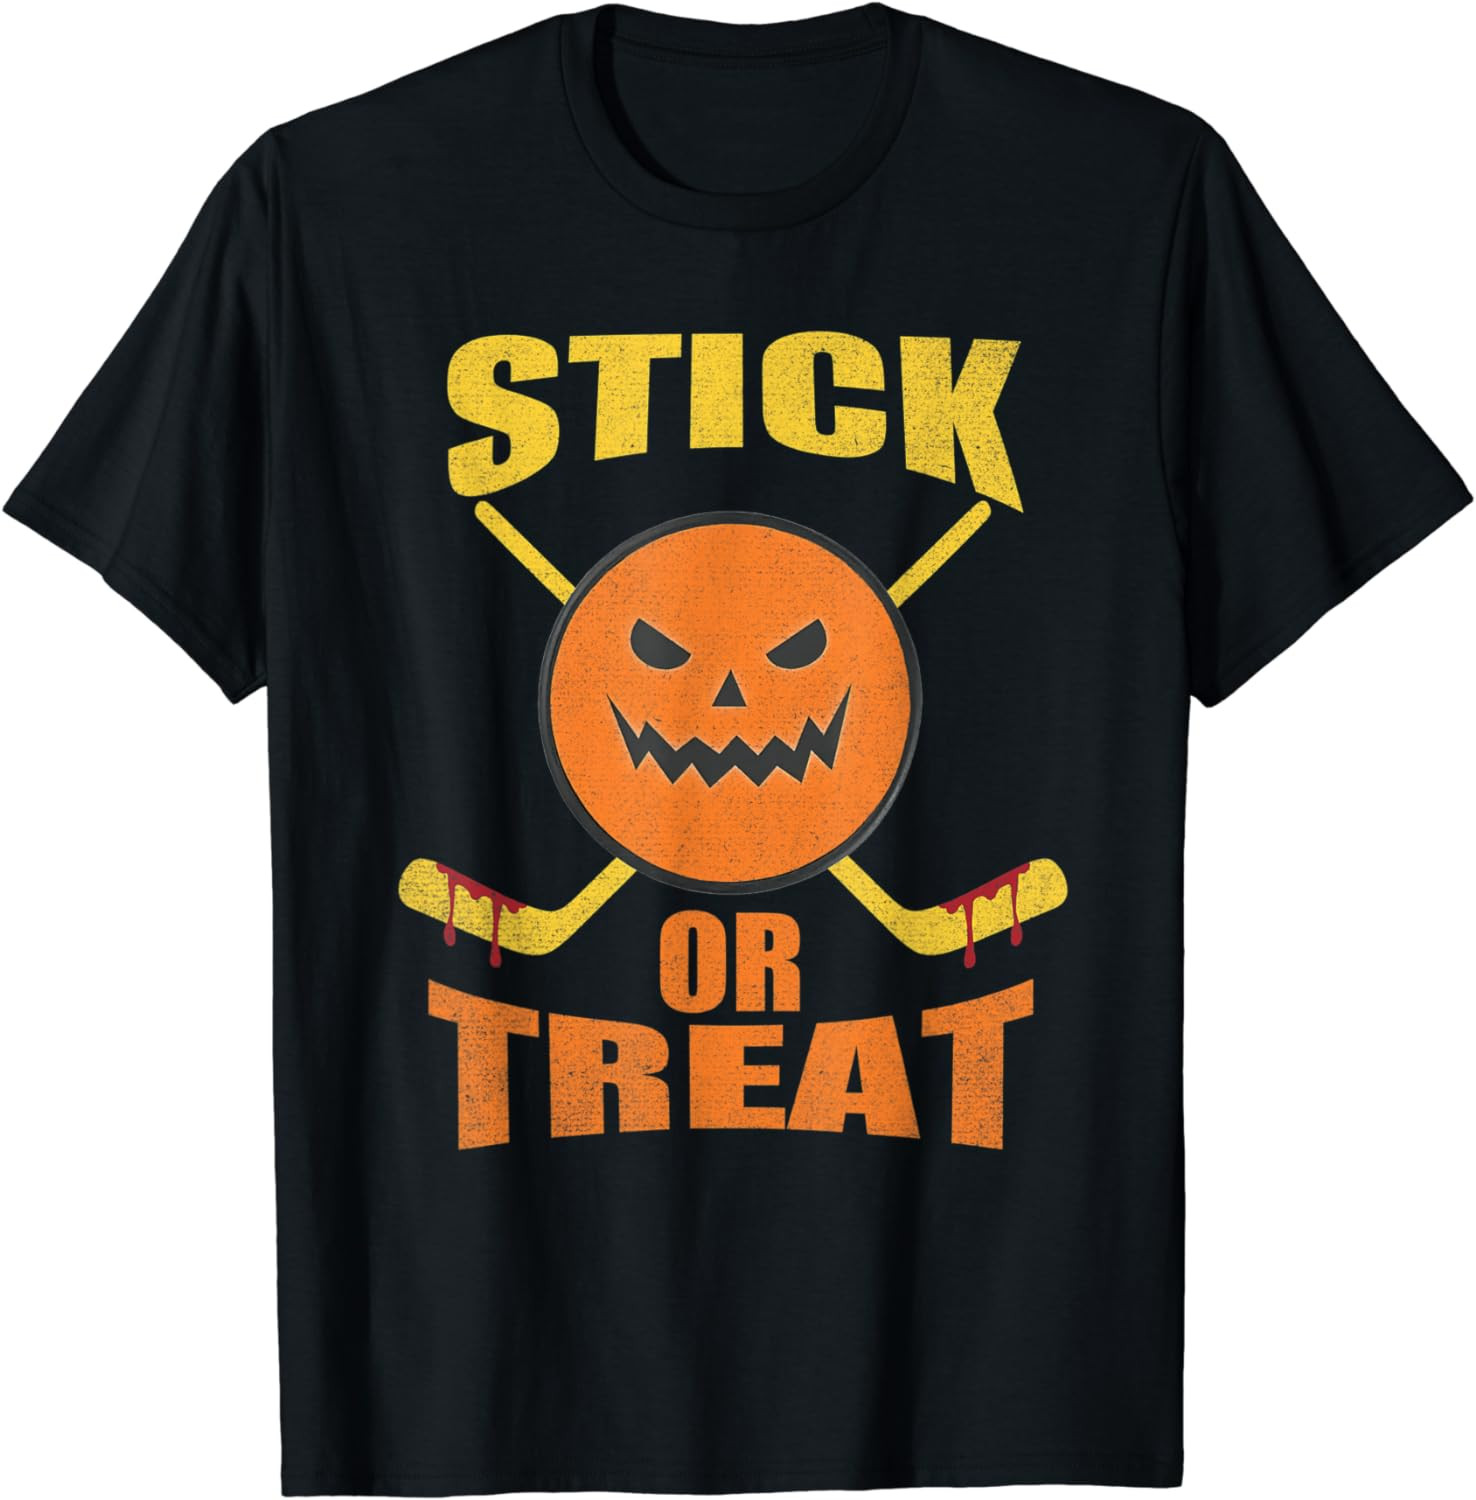 Stick Or Treat, Funny Halloween Hockey Puck T-Shirt